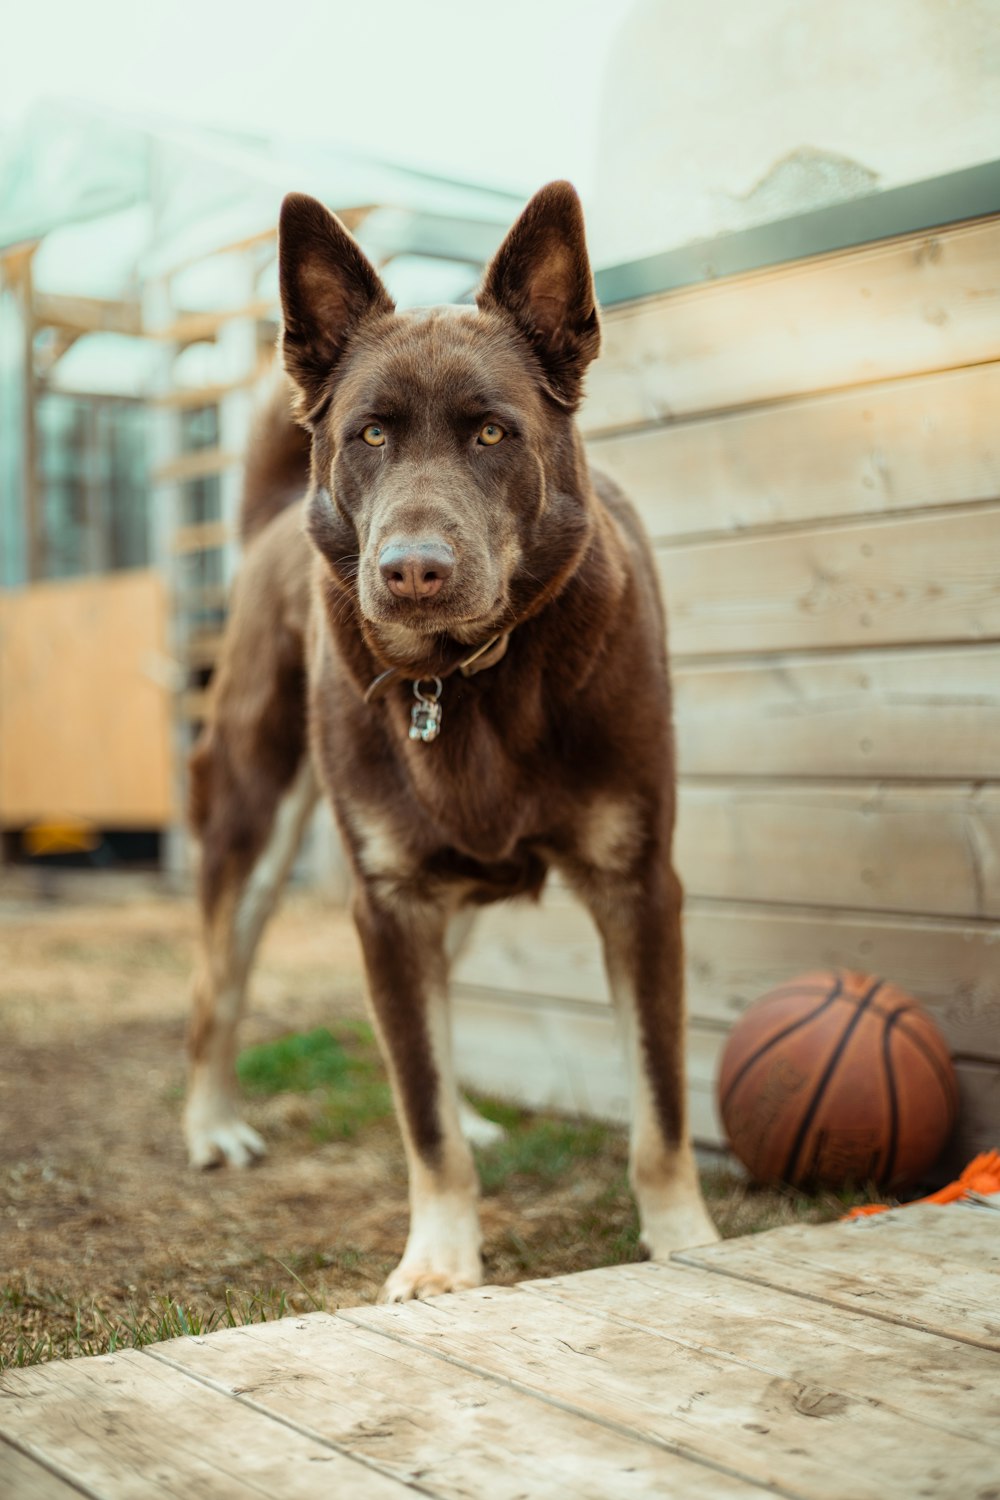 brown short coated dog biting brown basketball